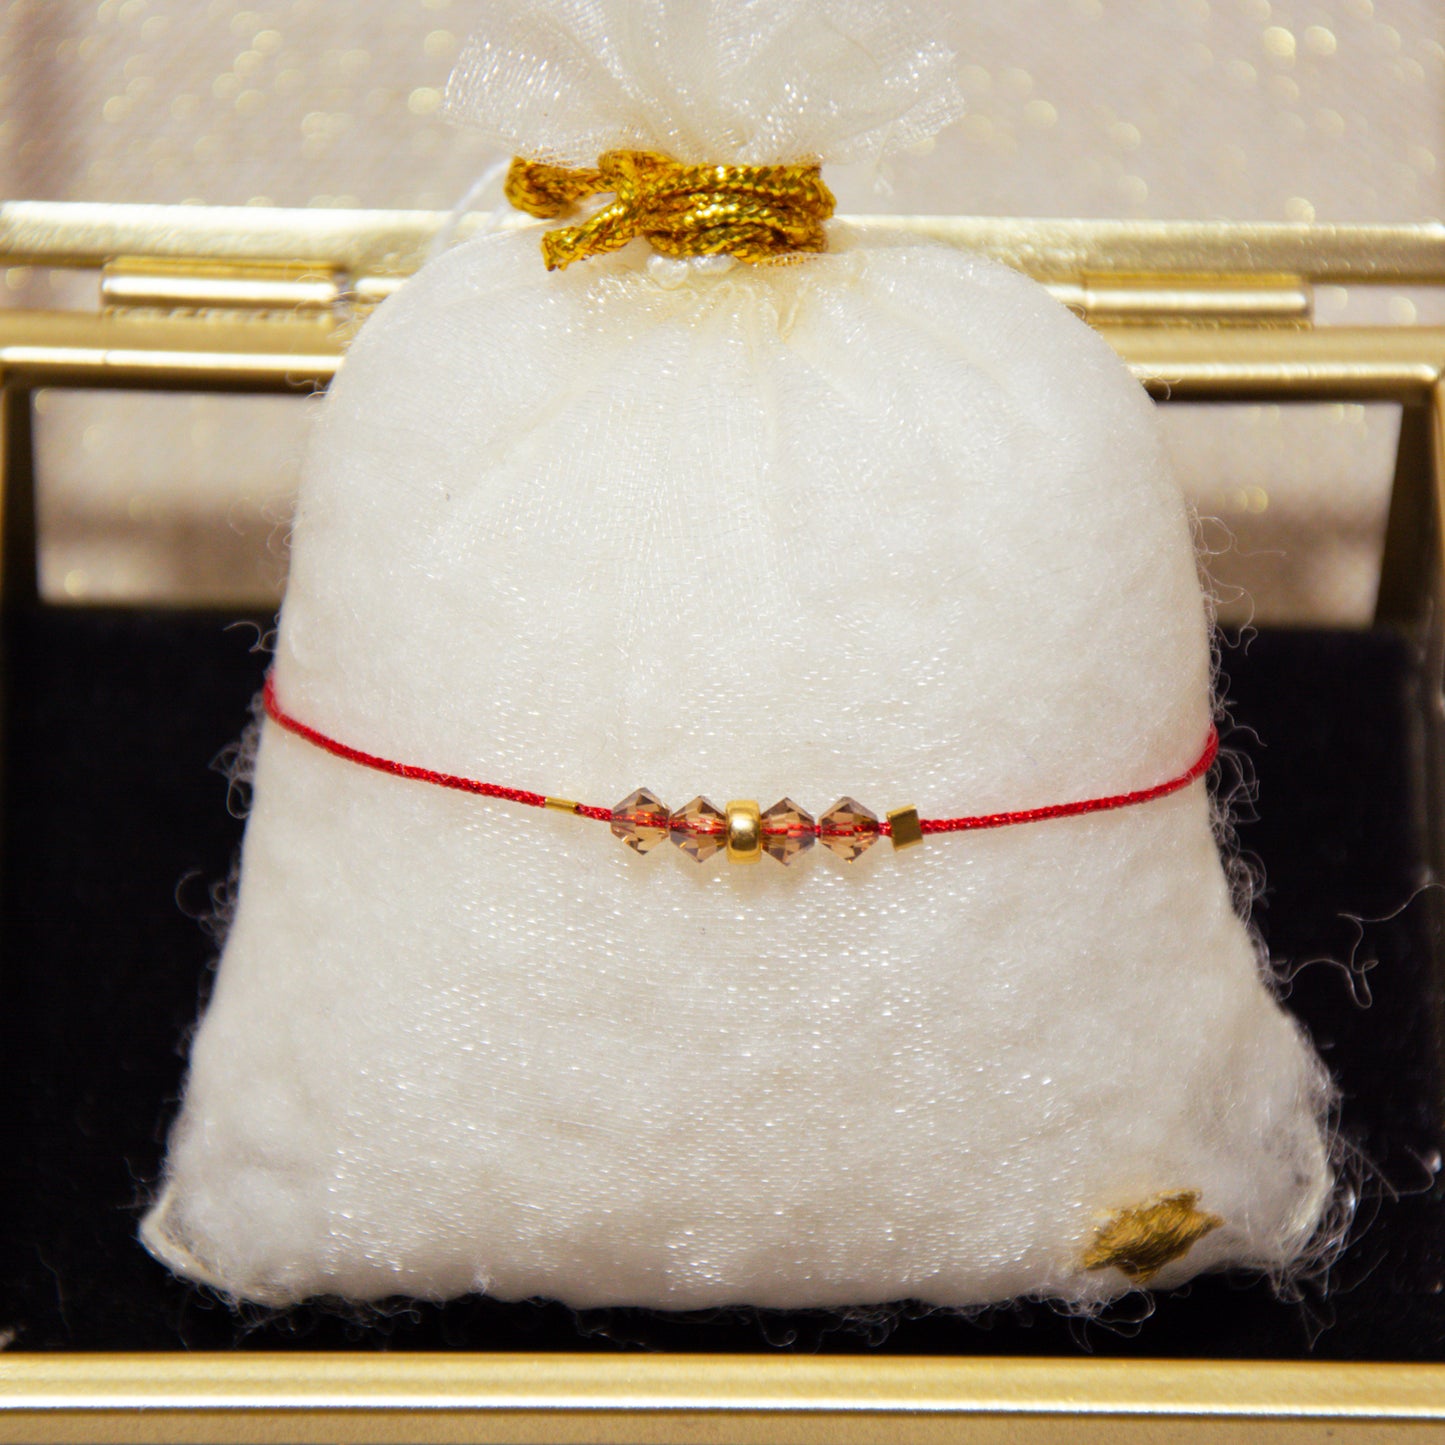 Japanese Silk Bracelets - Swarovski Crystals